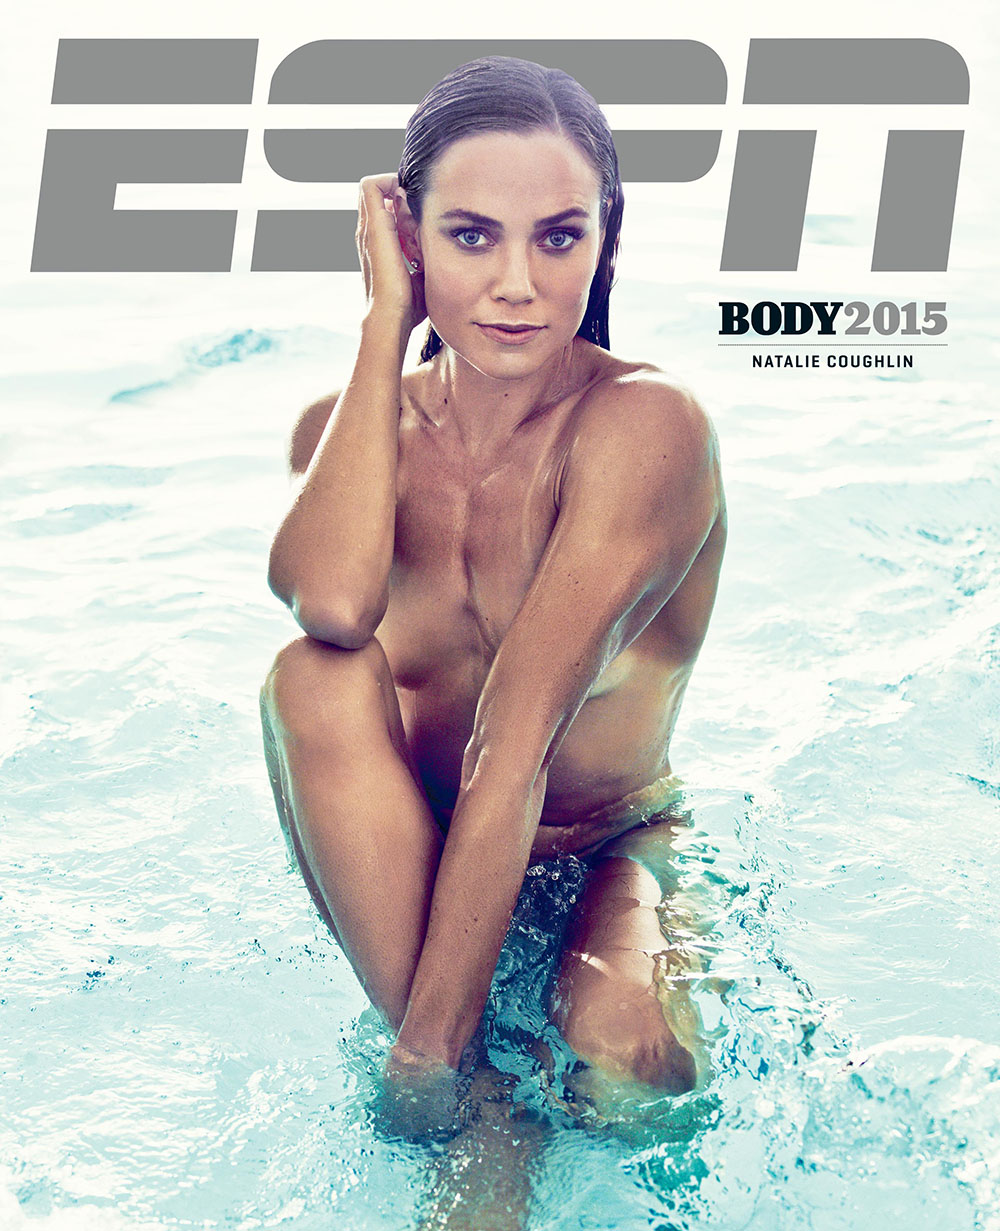 Noticias de fotografía: impresionantes desnudos deportivos de ESPN Natalie Coughlin fotografiados por Williams + Hirakawa